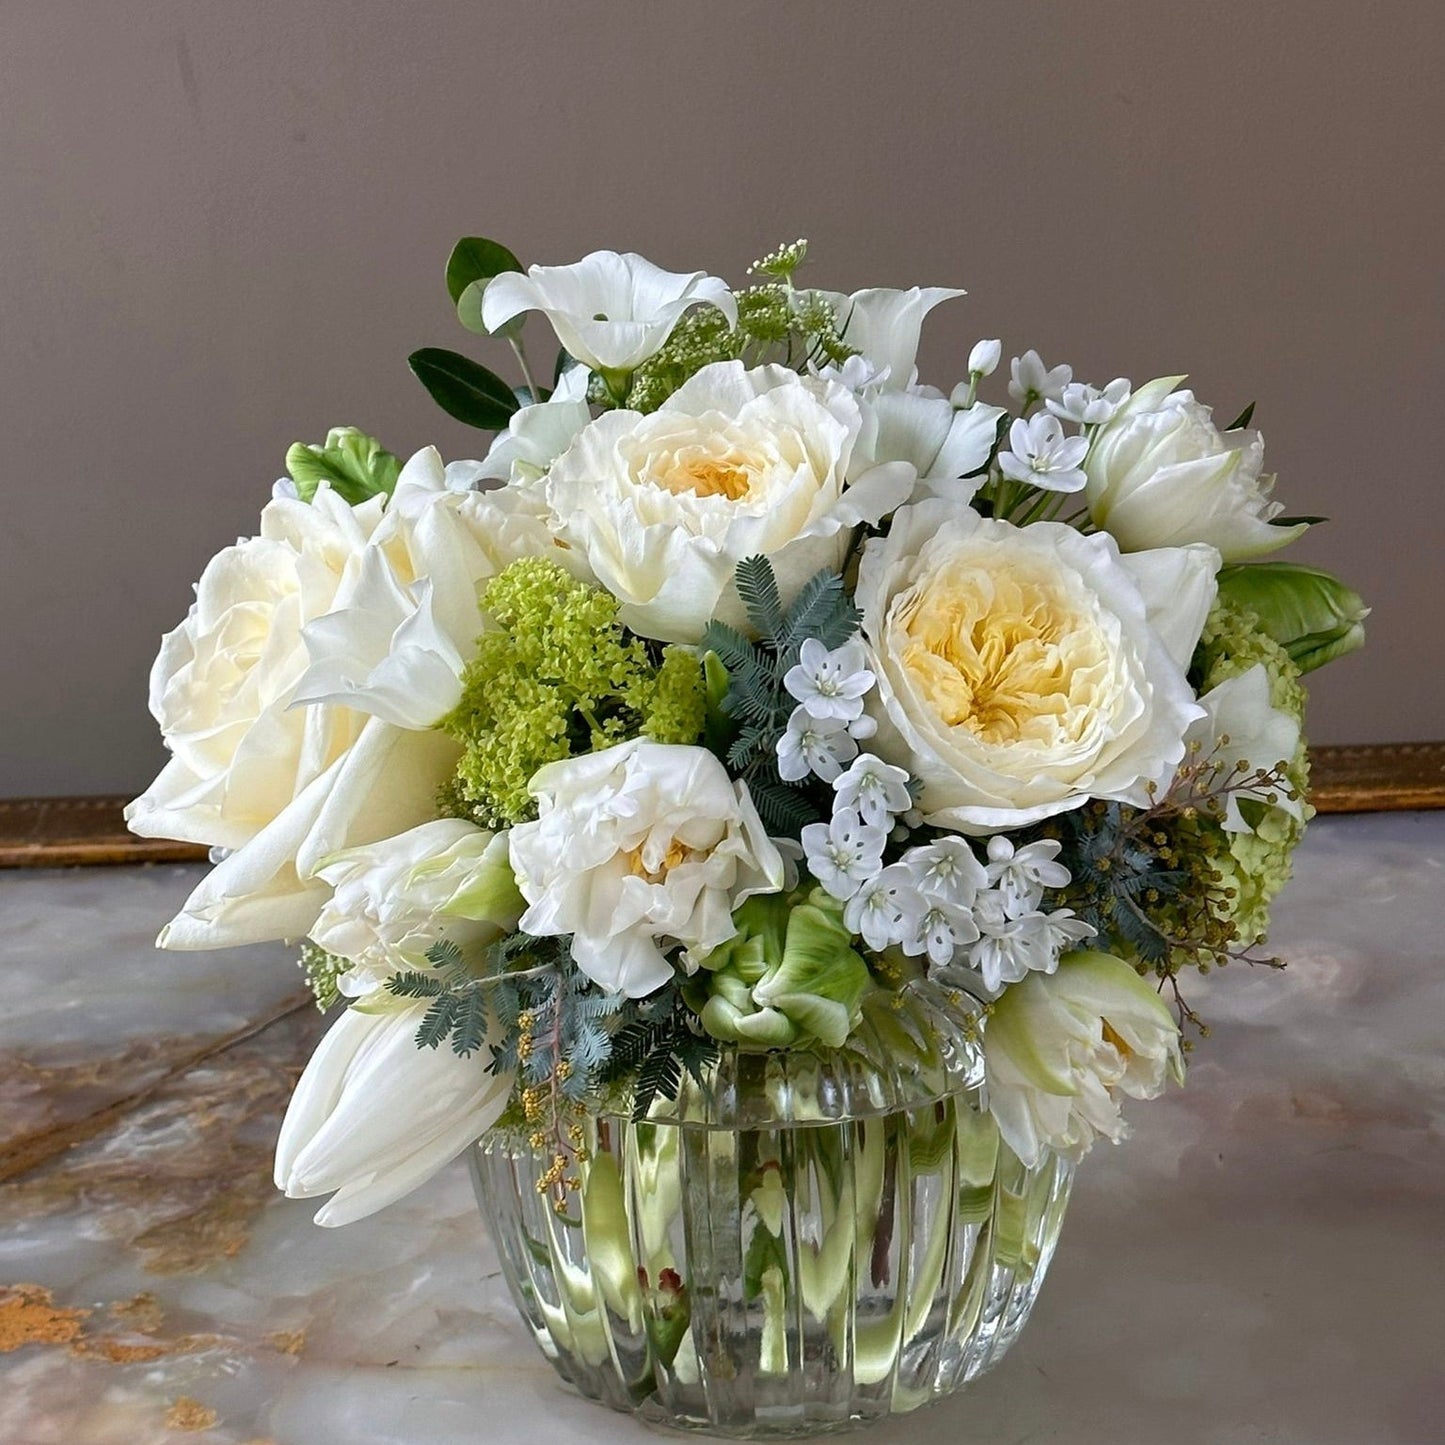 Florist's Choice Posy - Pulbrook & Gould Flowers London